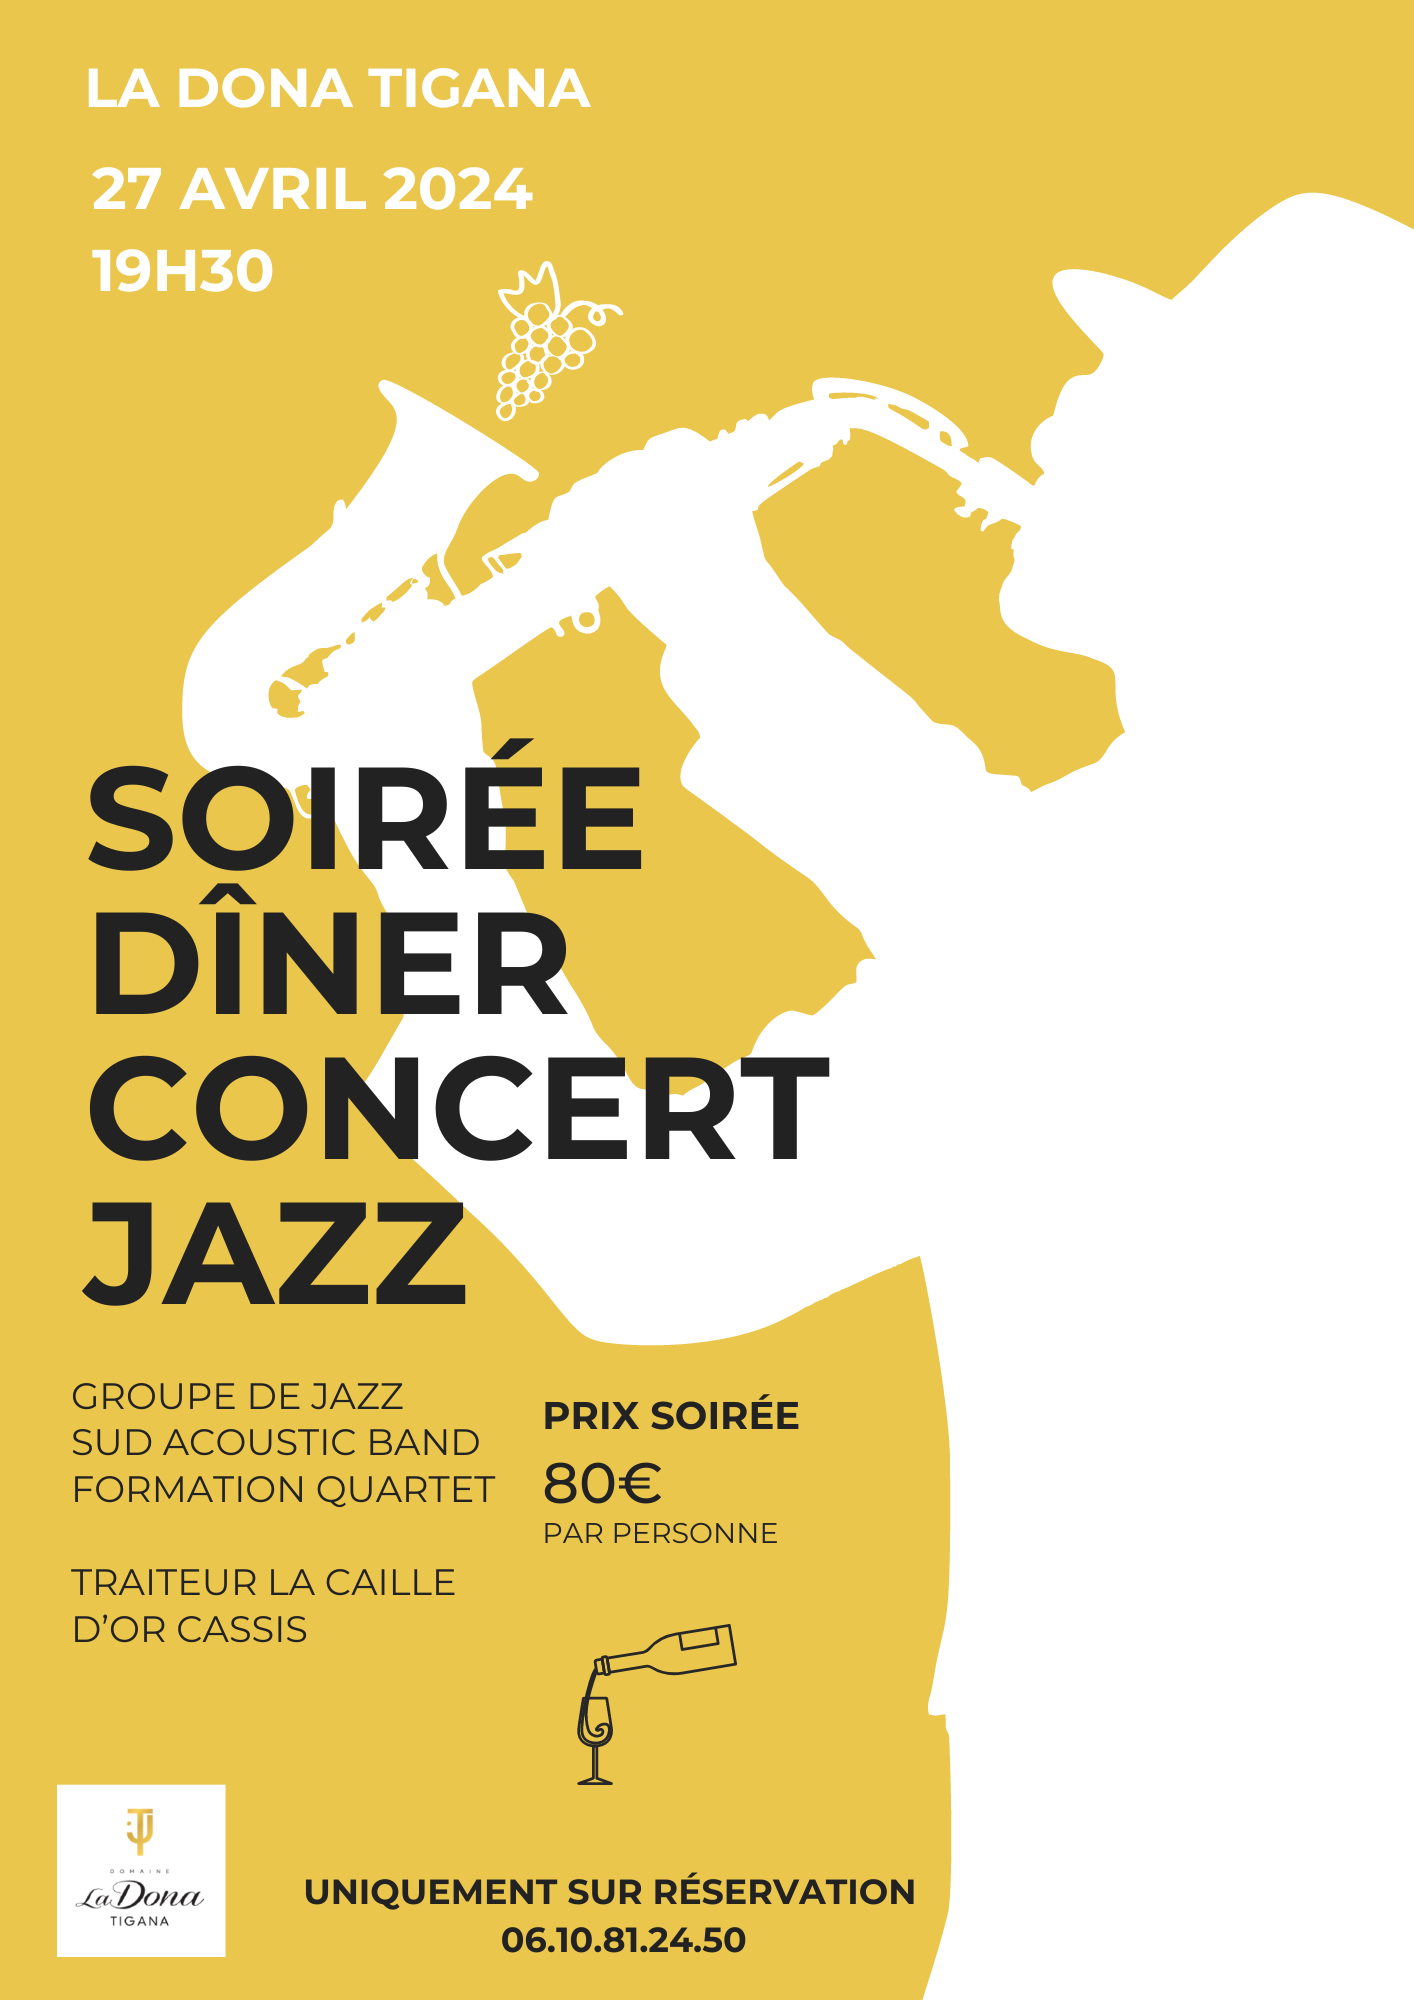 Jazz dinner concert April 27, 2024